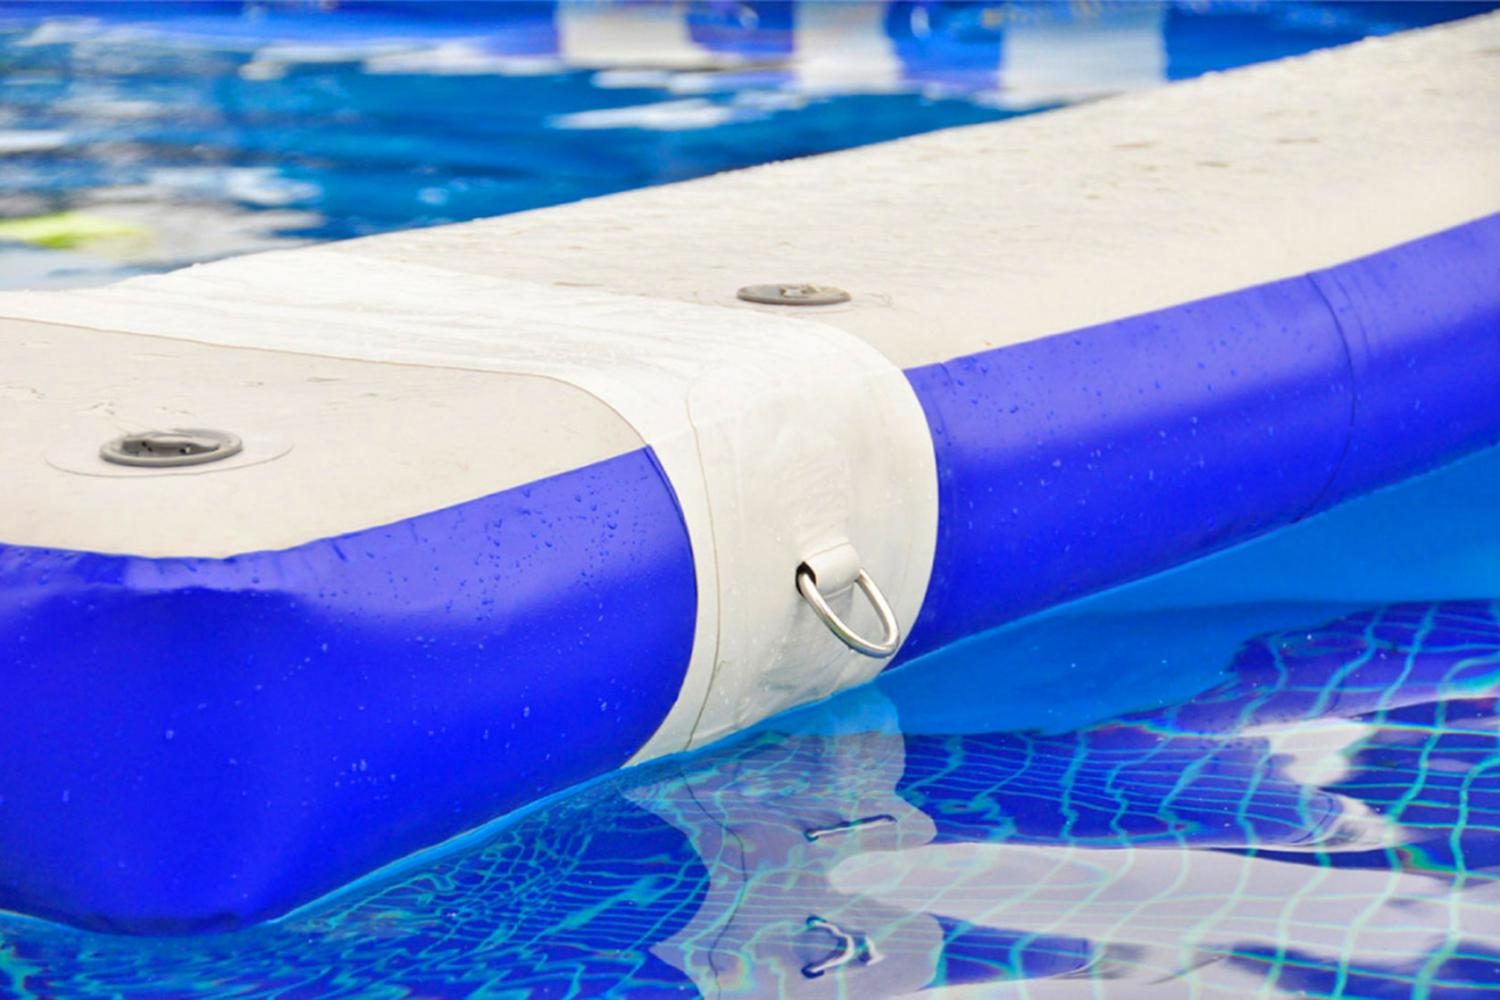 Aguaglide Ocean Pool - Inflatable sea pool gives closed mesh swimming pool in lake or ocean